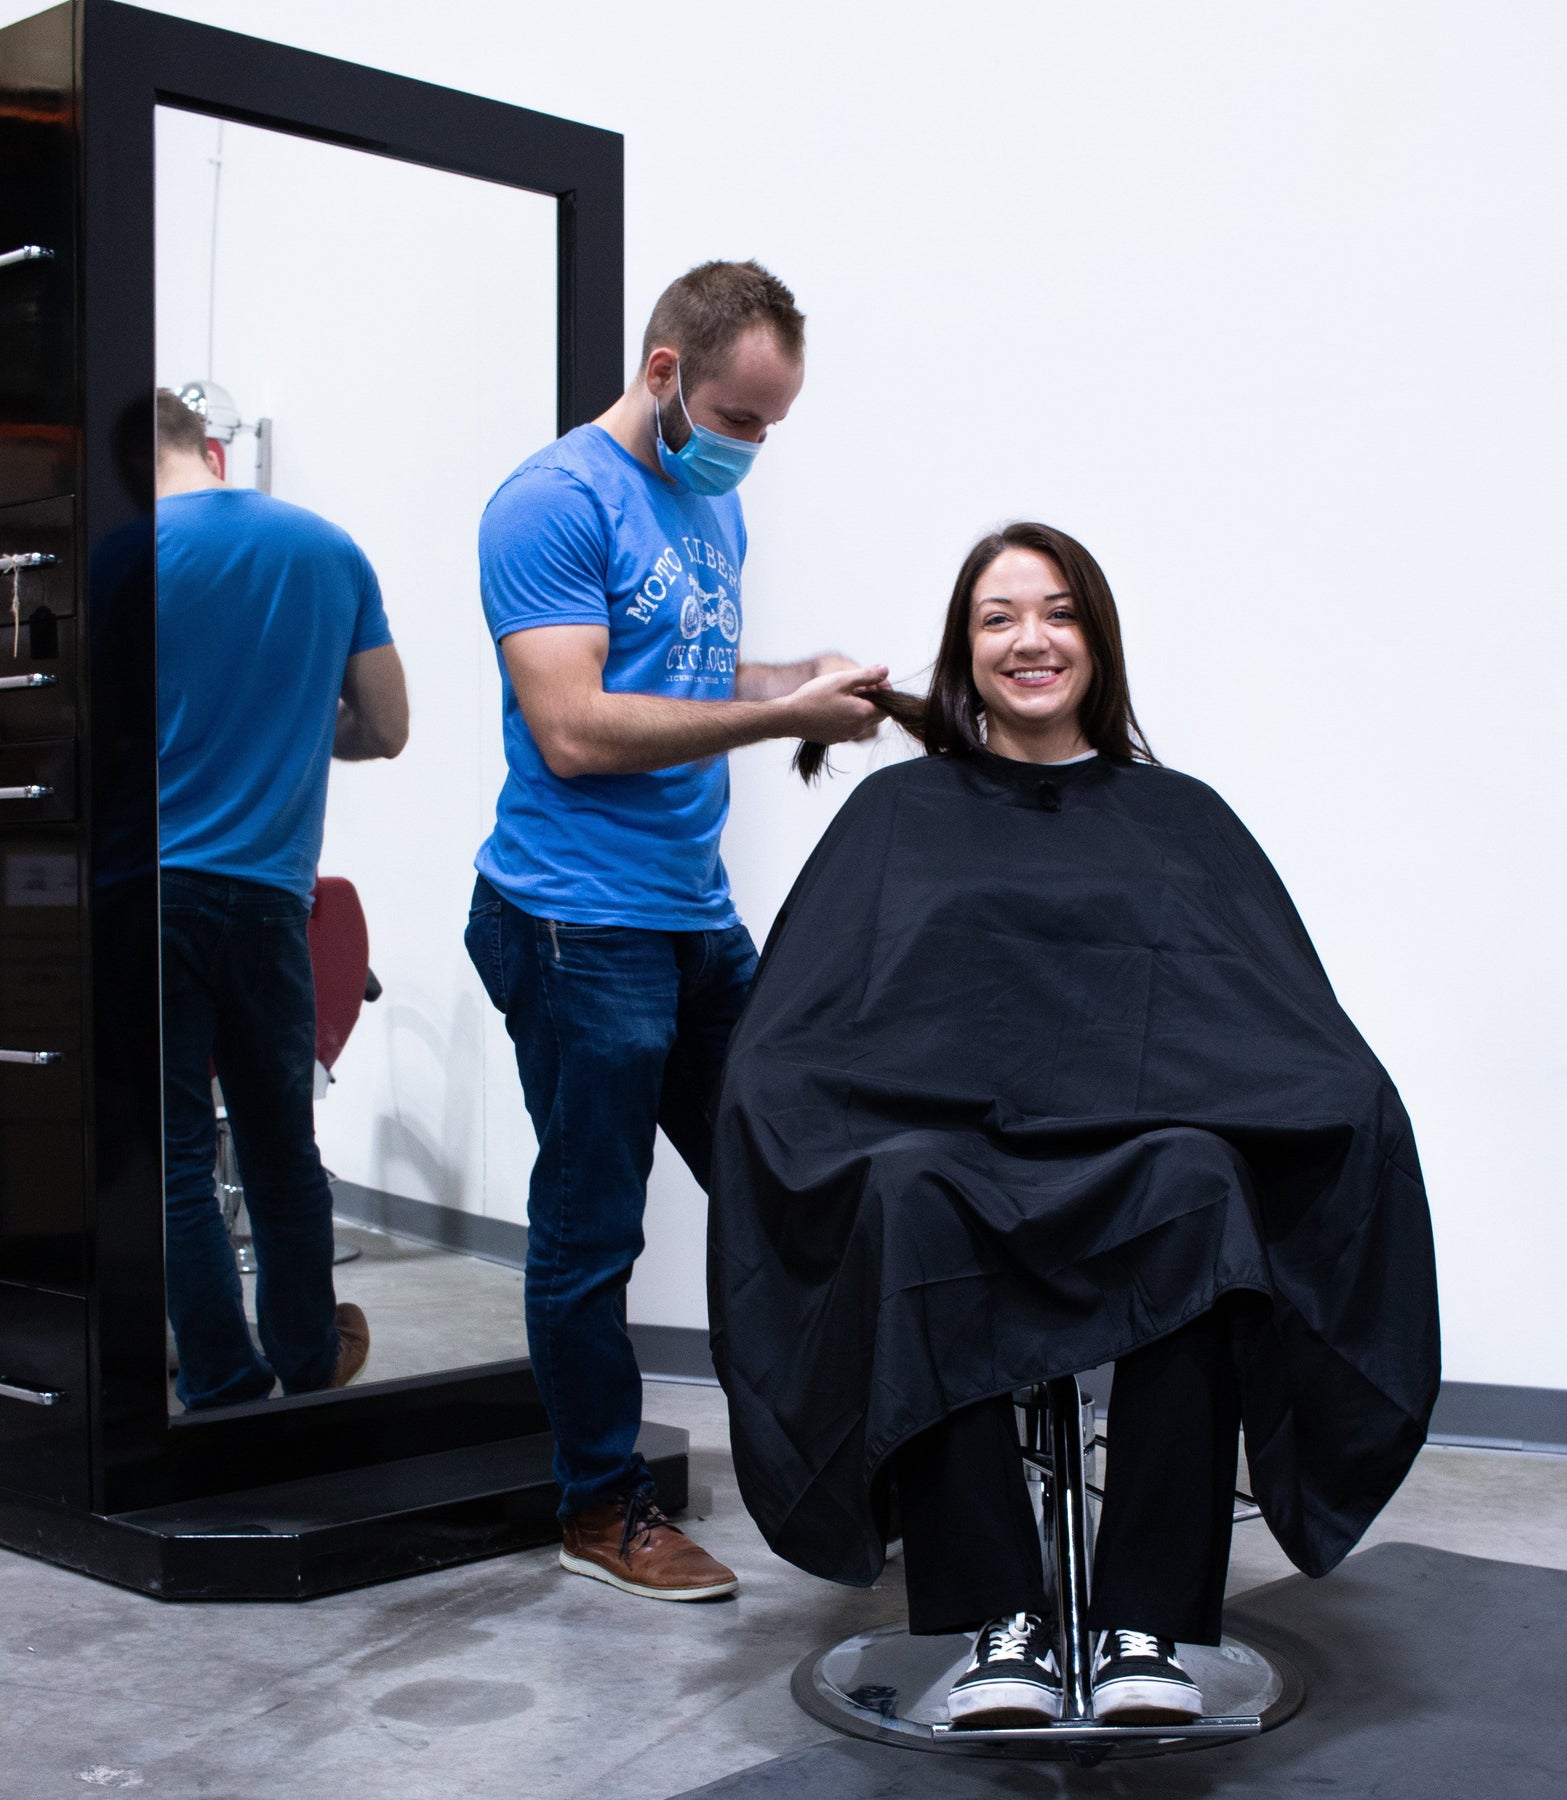 Hair Cutting Cape with Armholes - Professional Salon Cape - 100% Nylon -  Haircut Cape - Hairdresser Cape - Styling Cape (Black)